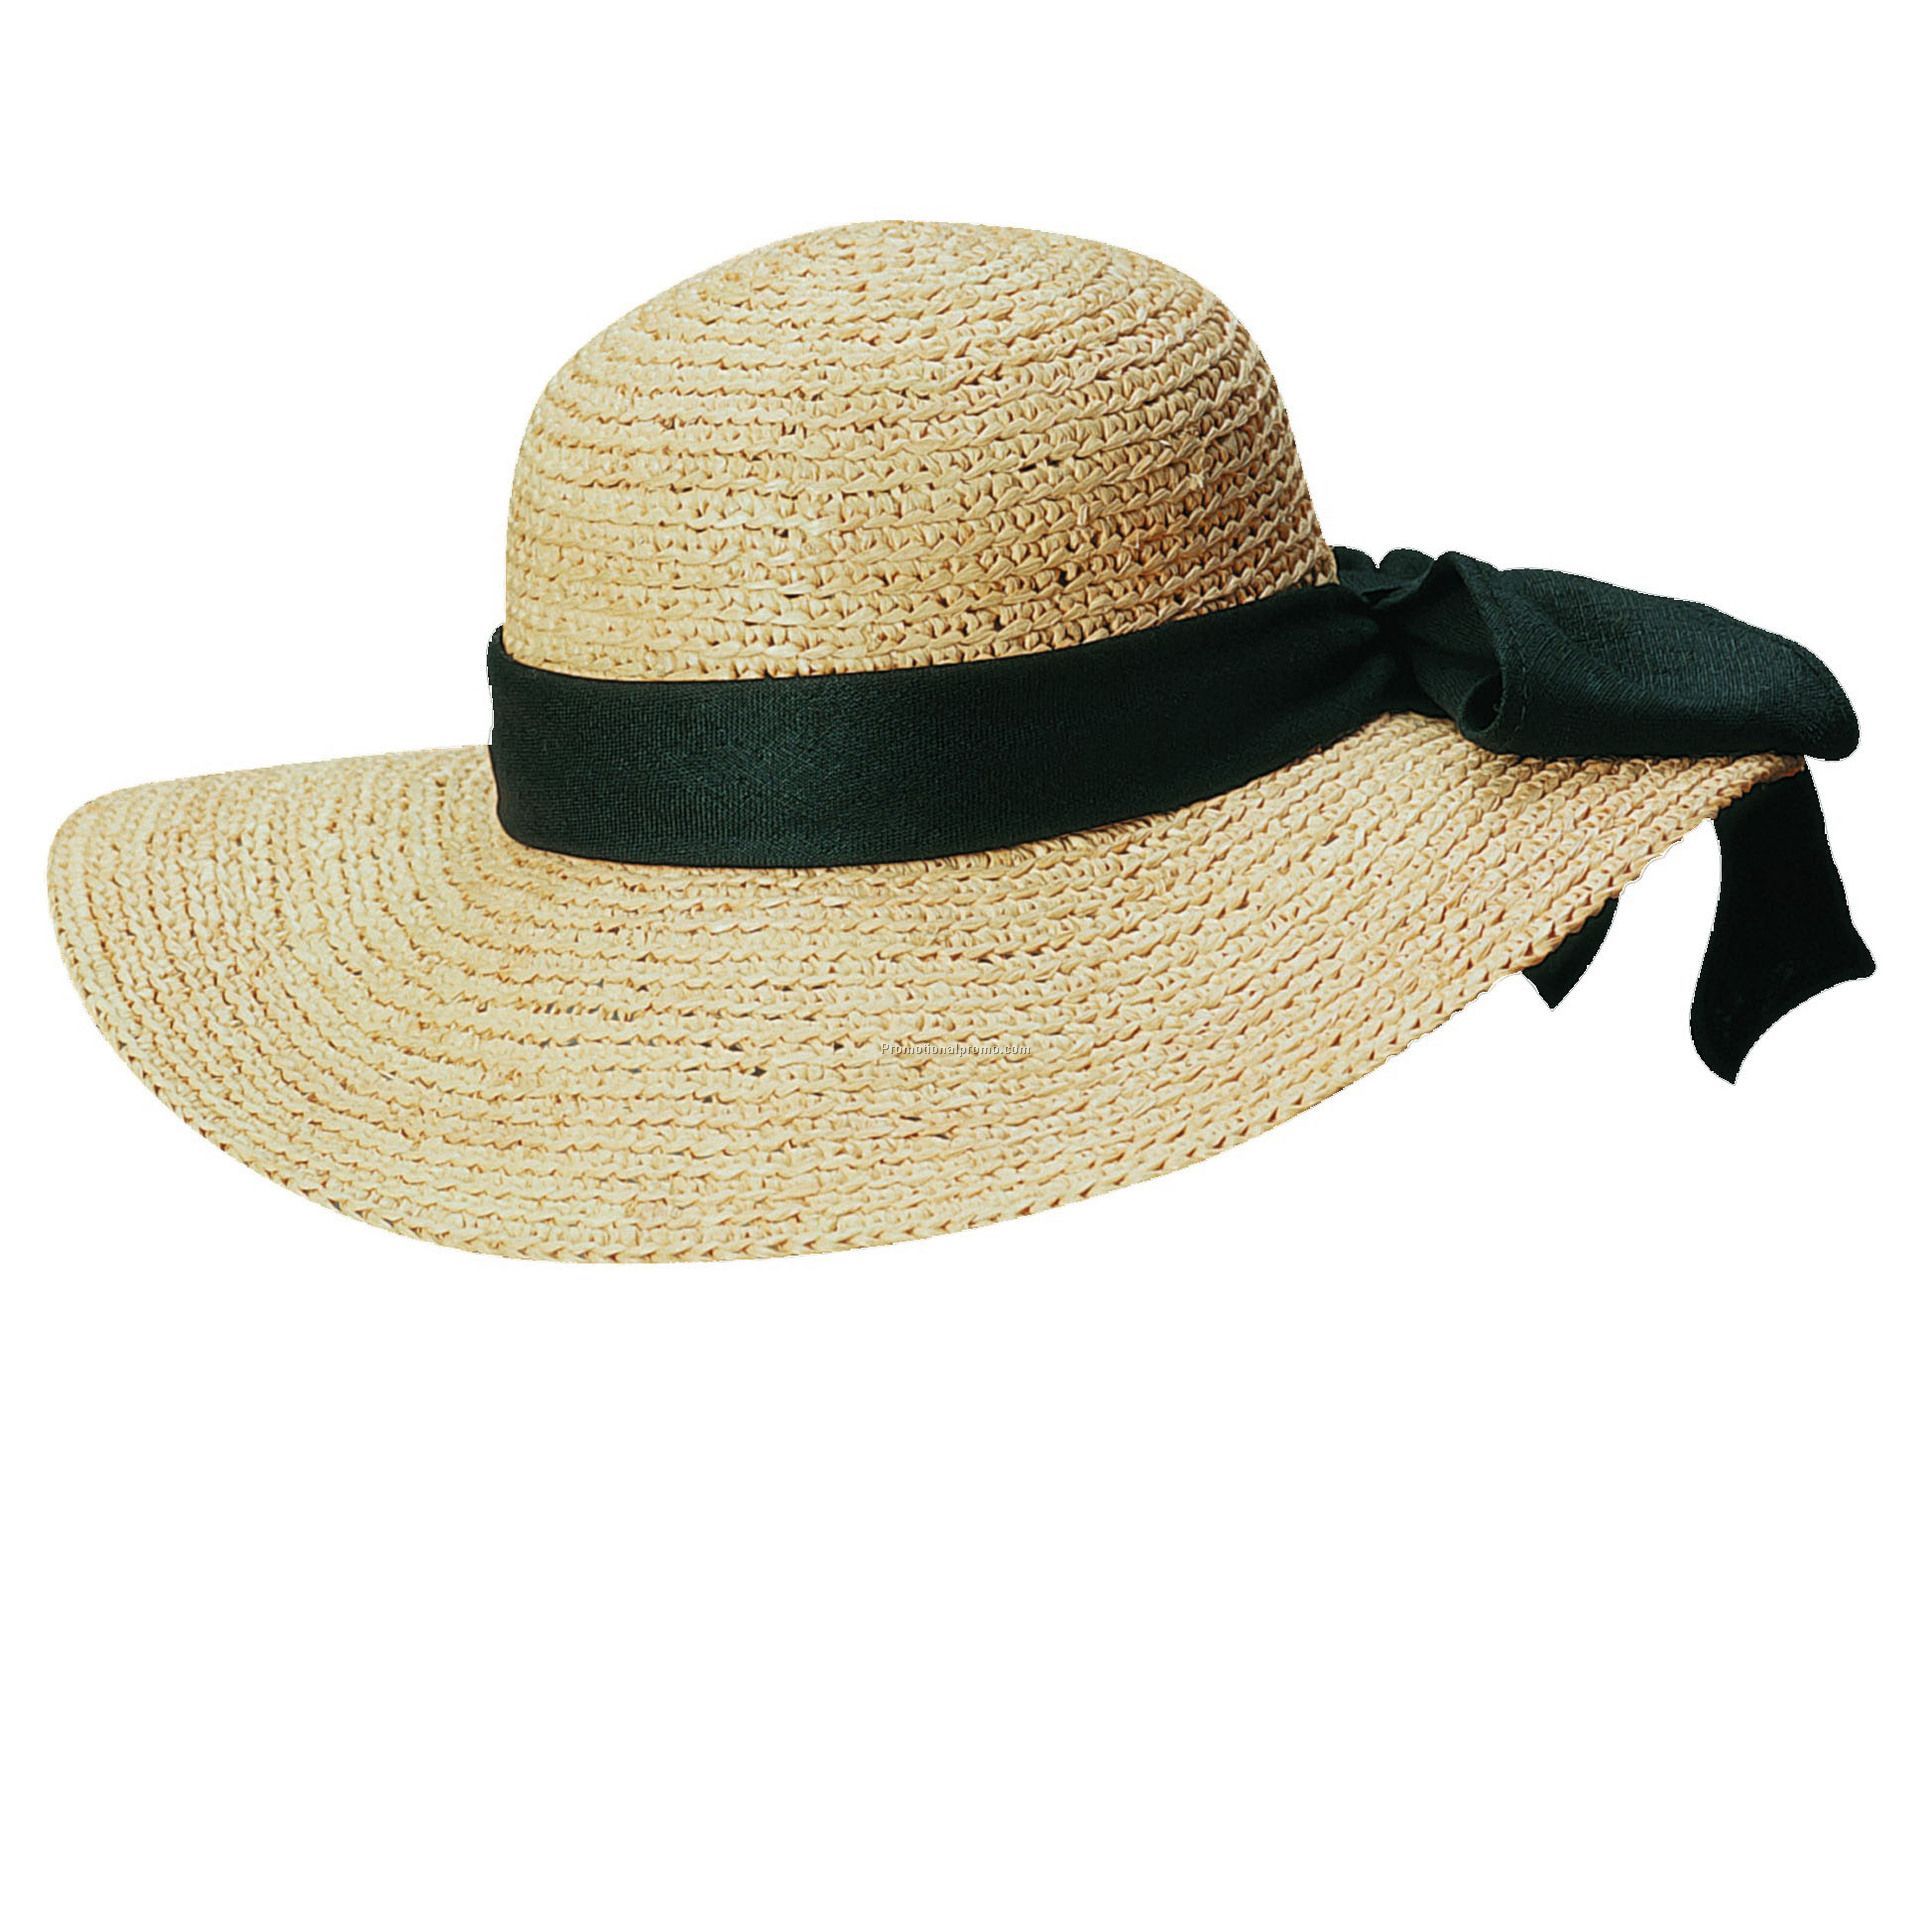 Lady straw hat